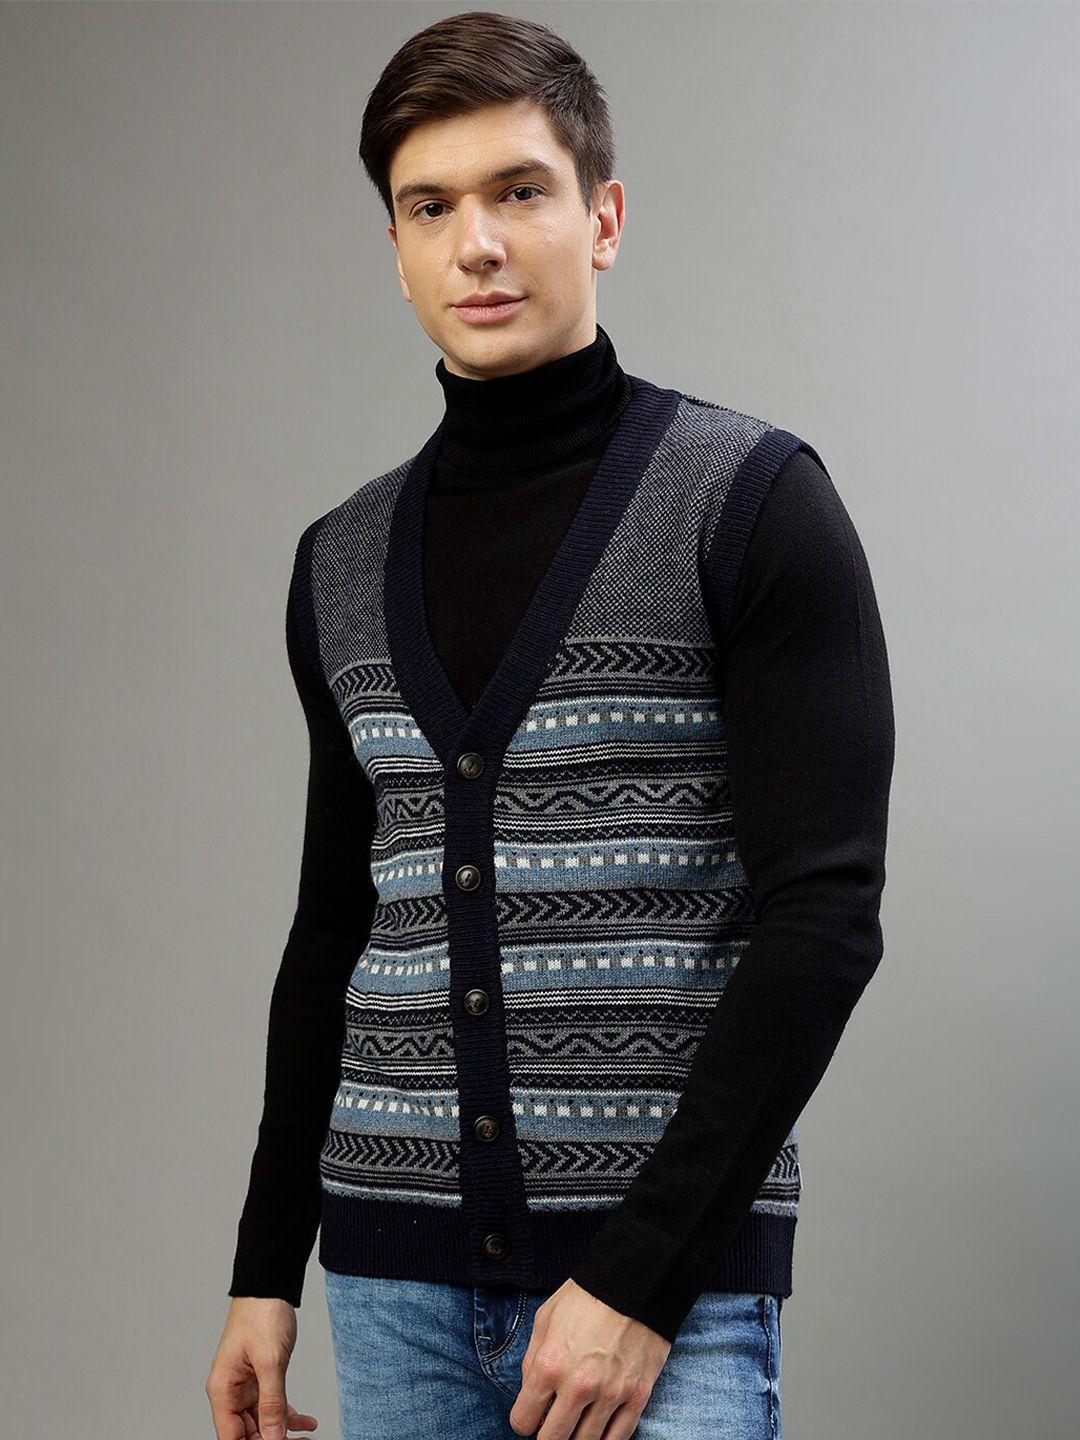 lindbergh fair isle printed v-neck sleeveless cardigan sweater